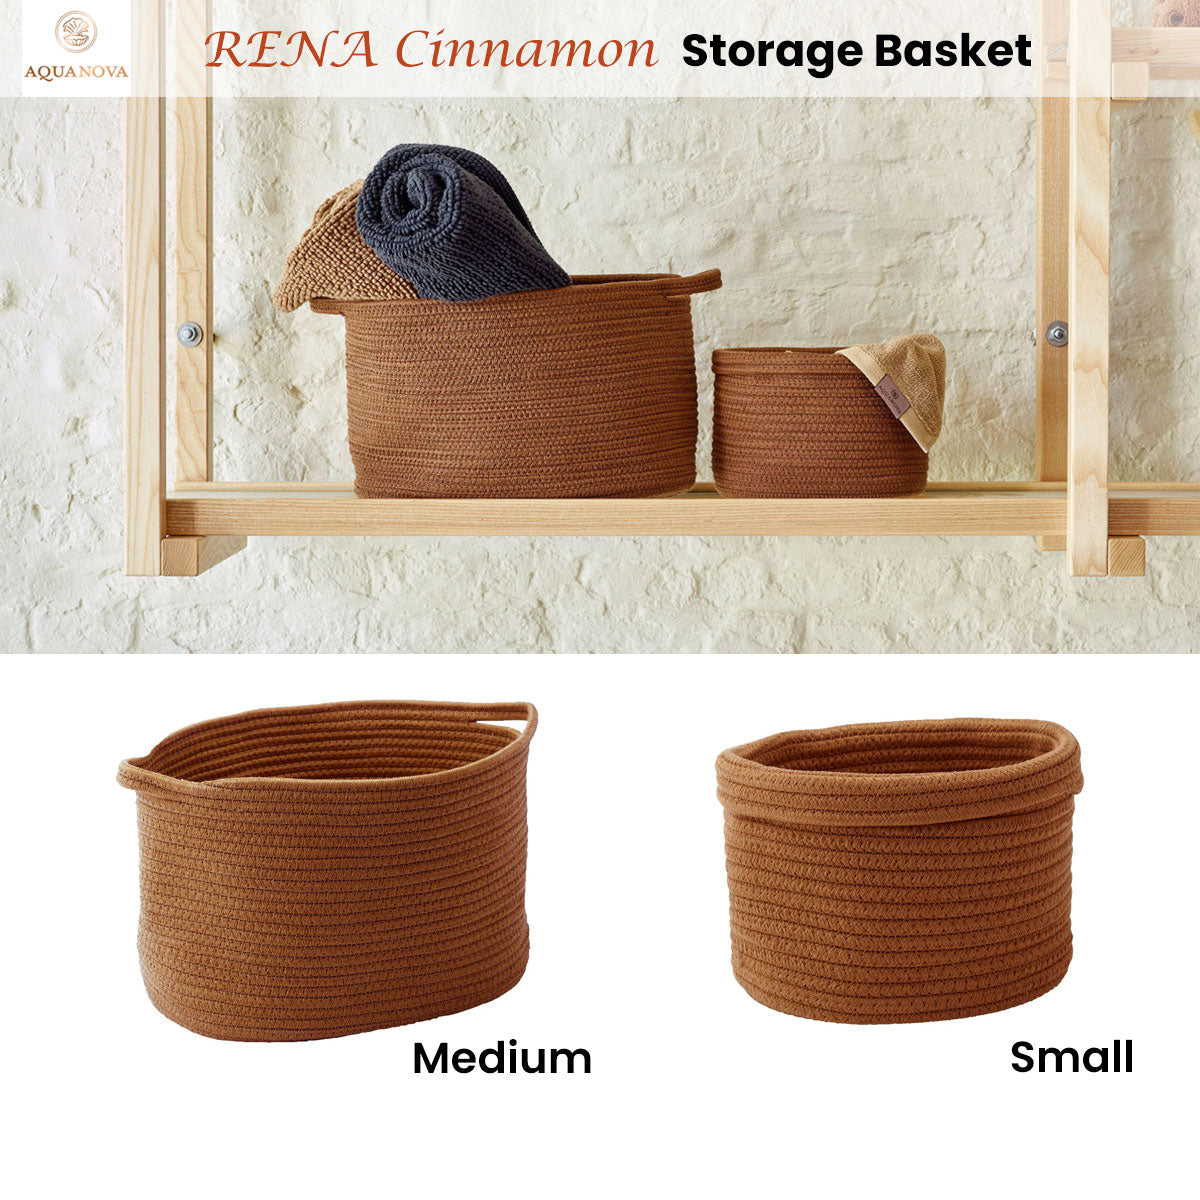 RENA Cinnamon Storage Basket Small